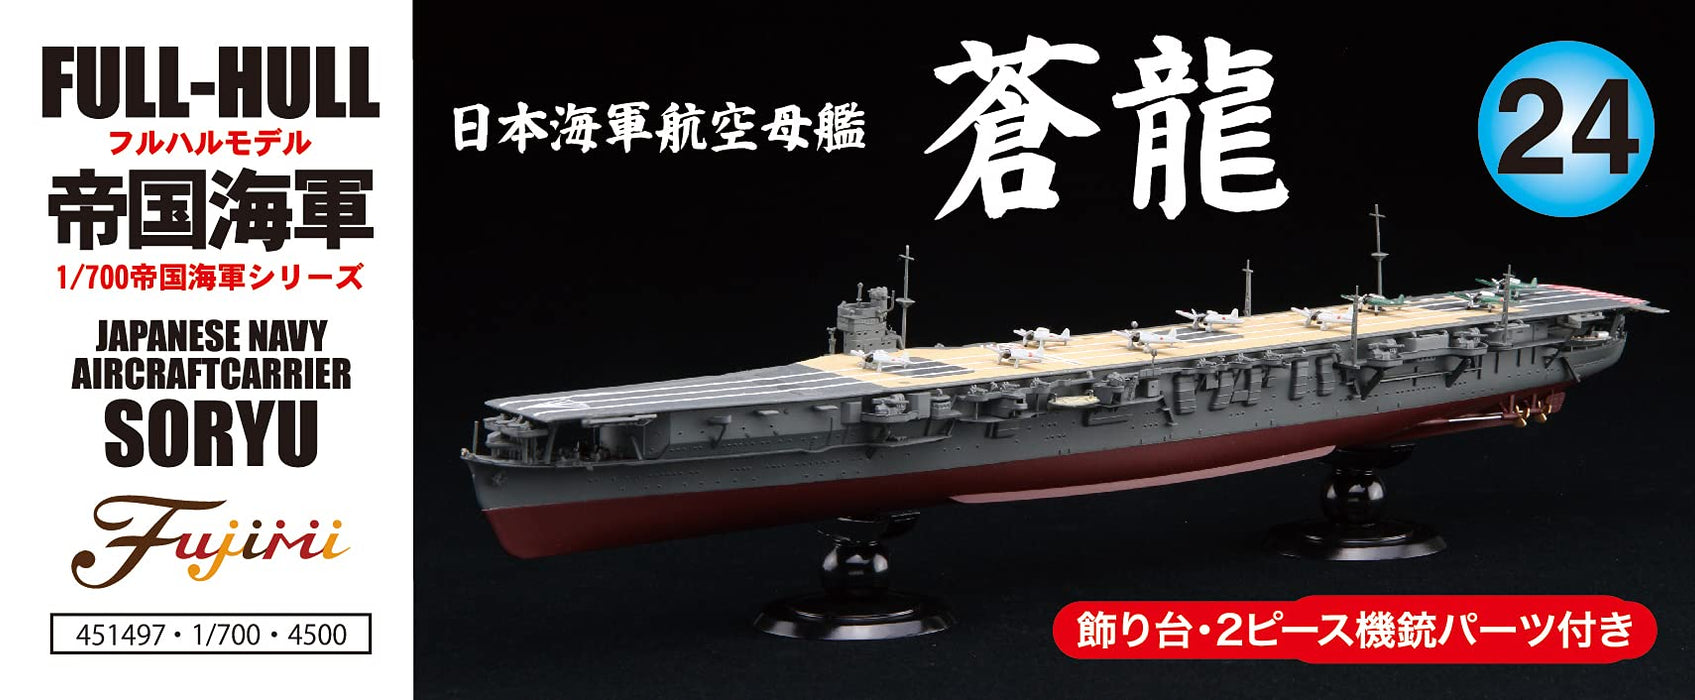 Fujimi Model 1/700 Imperial Navy Series No.24 Japanese Navy Aircraft Carrier Soryu Full Hull Model Fh-24